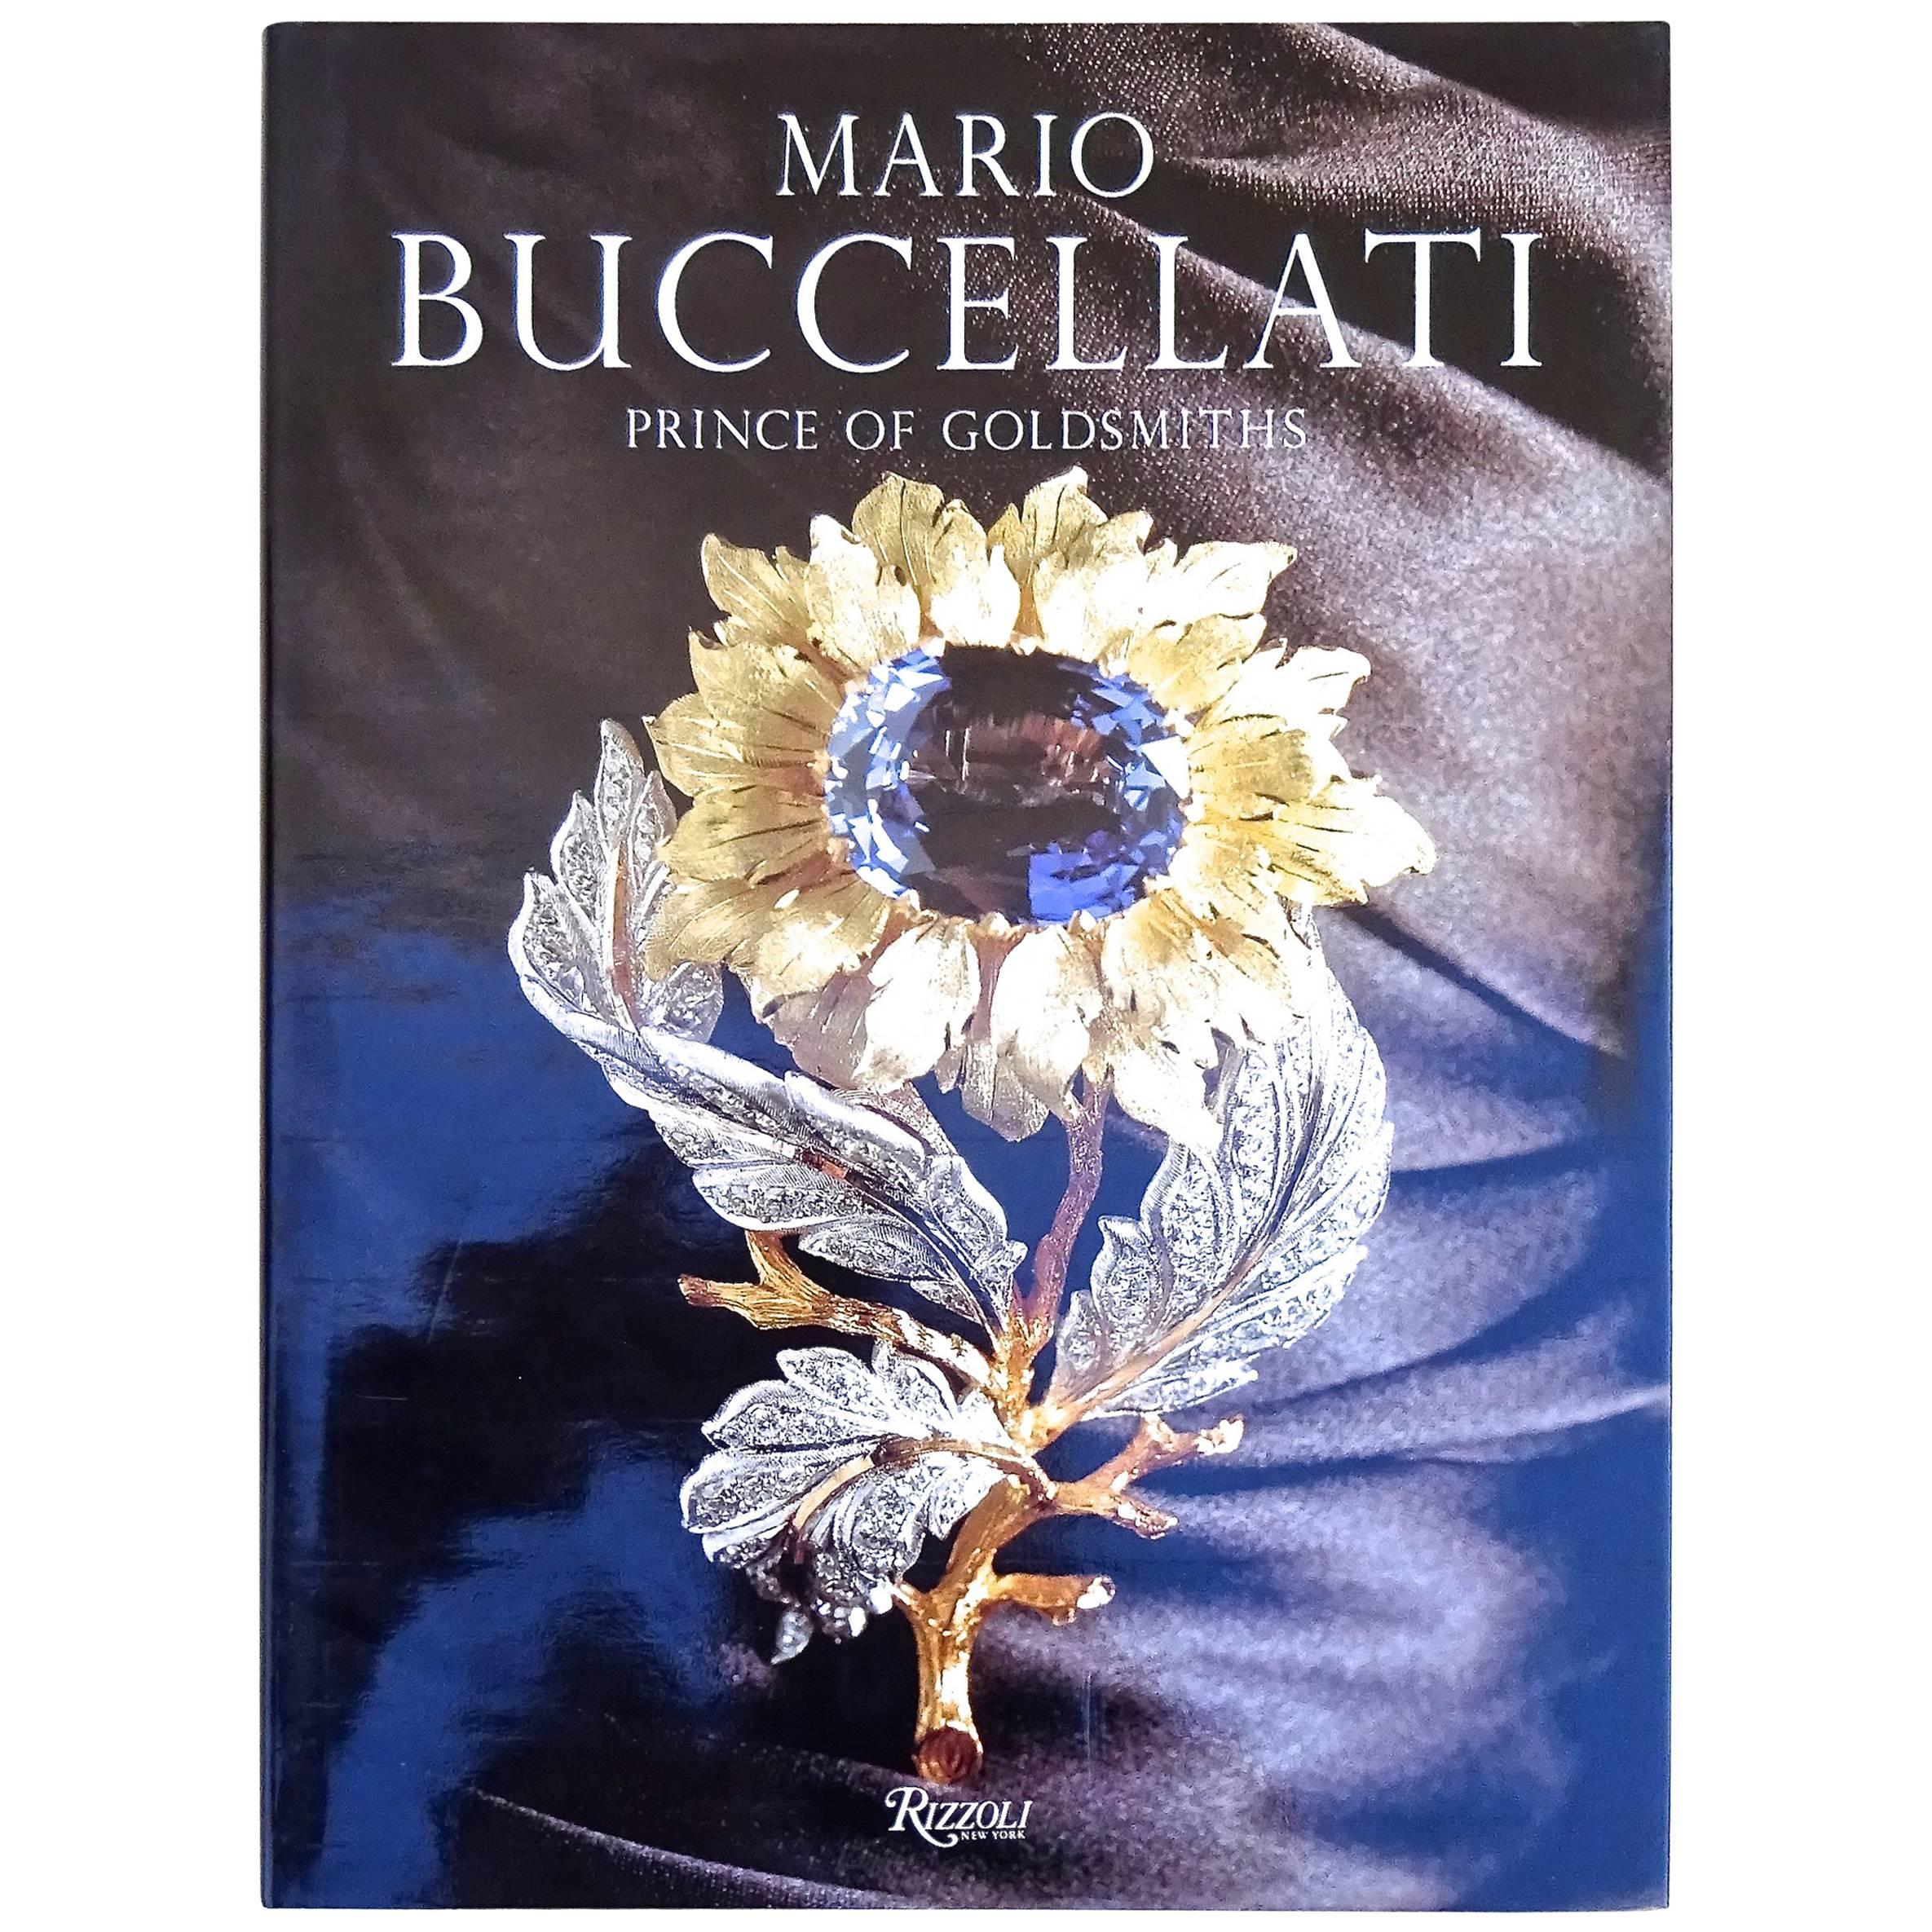 Rare "Mario Buccellatti Prince of Goldsmiths" Book, 1998, First Edition For Sale